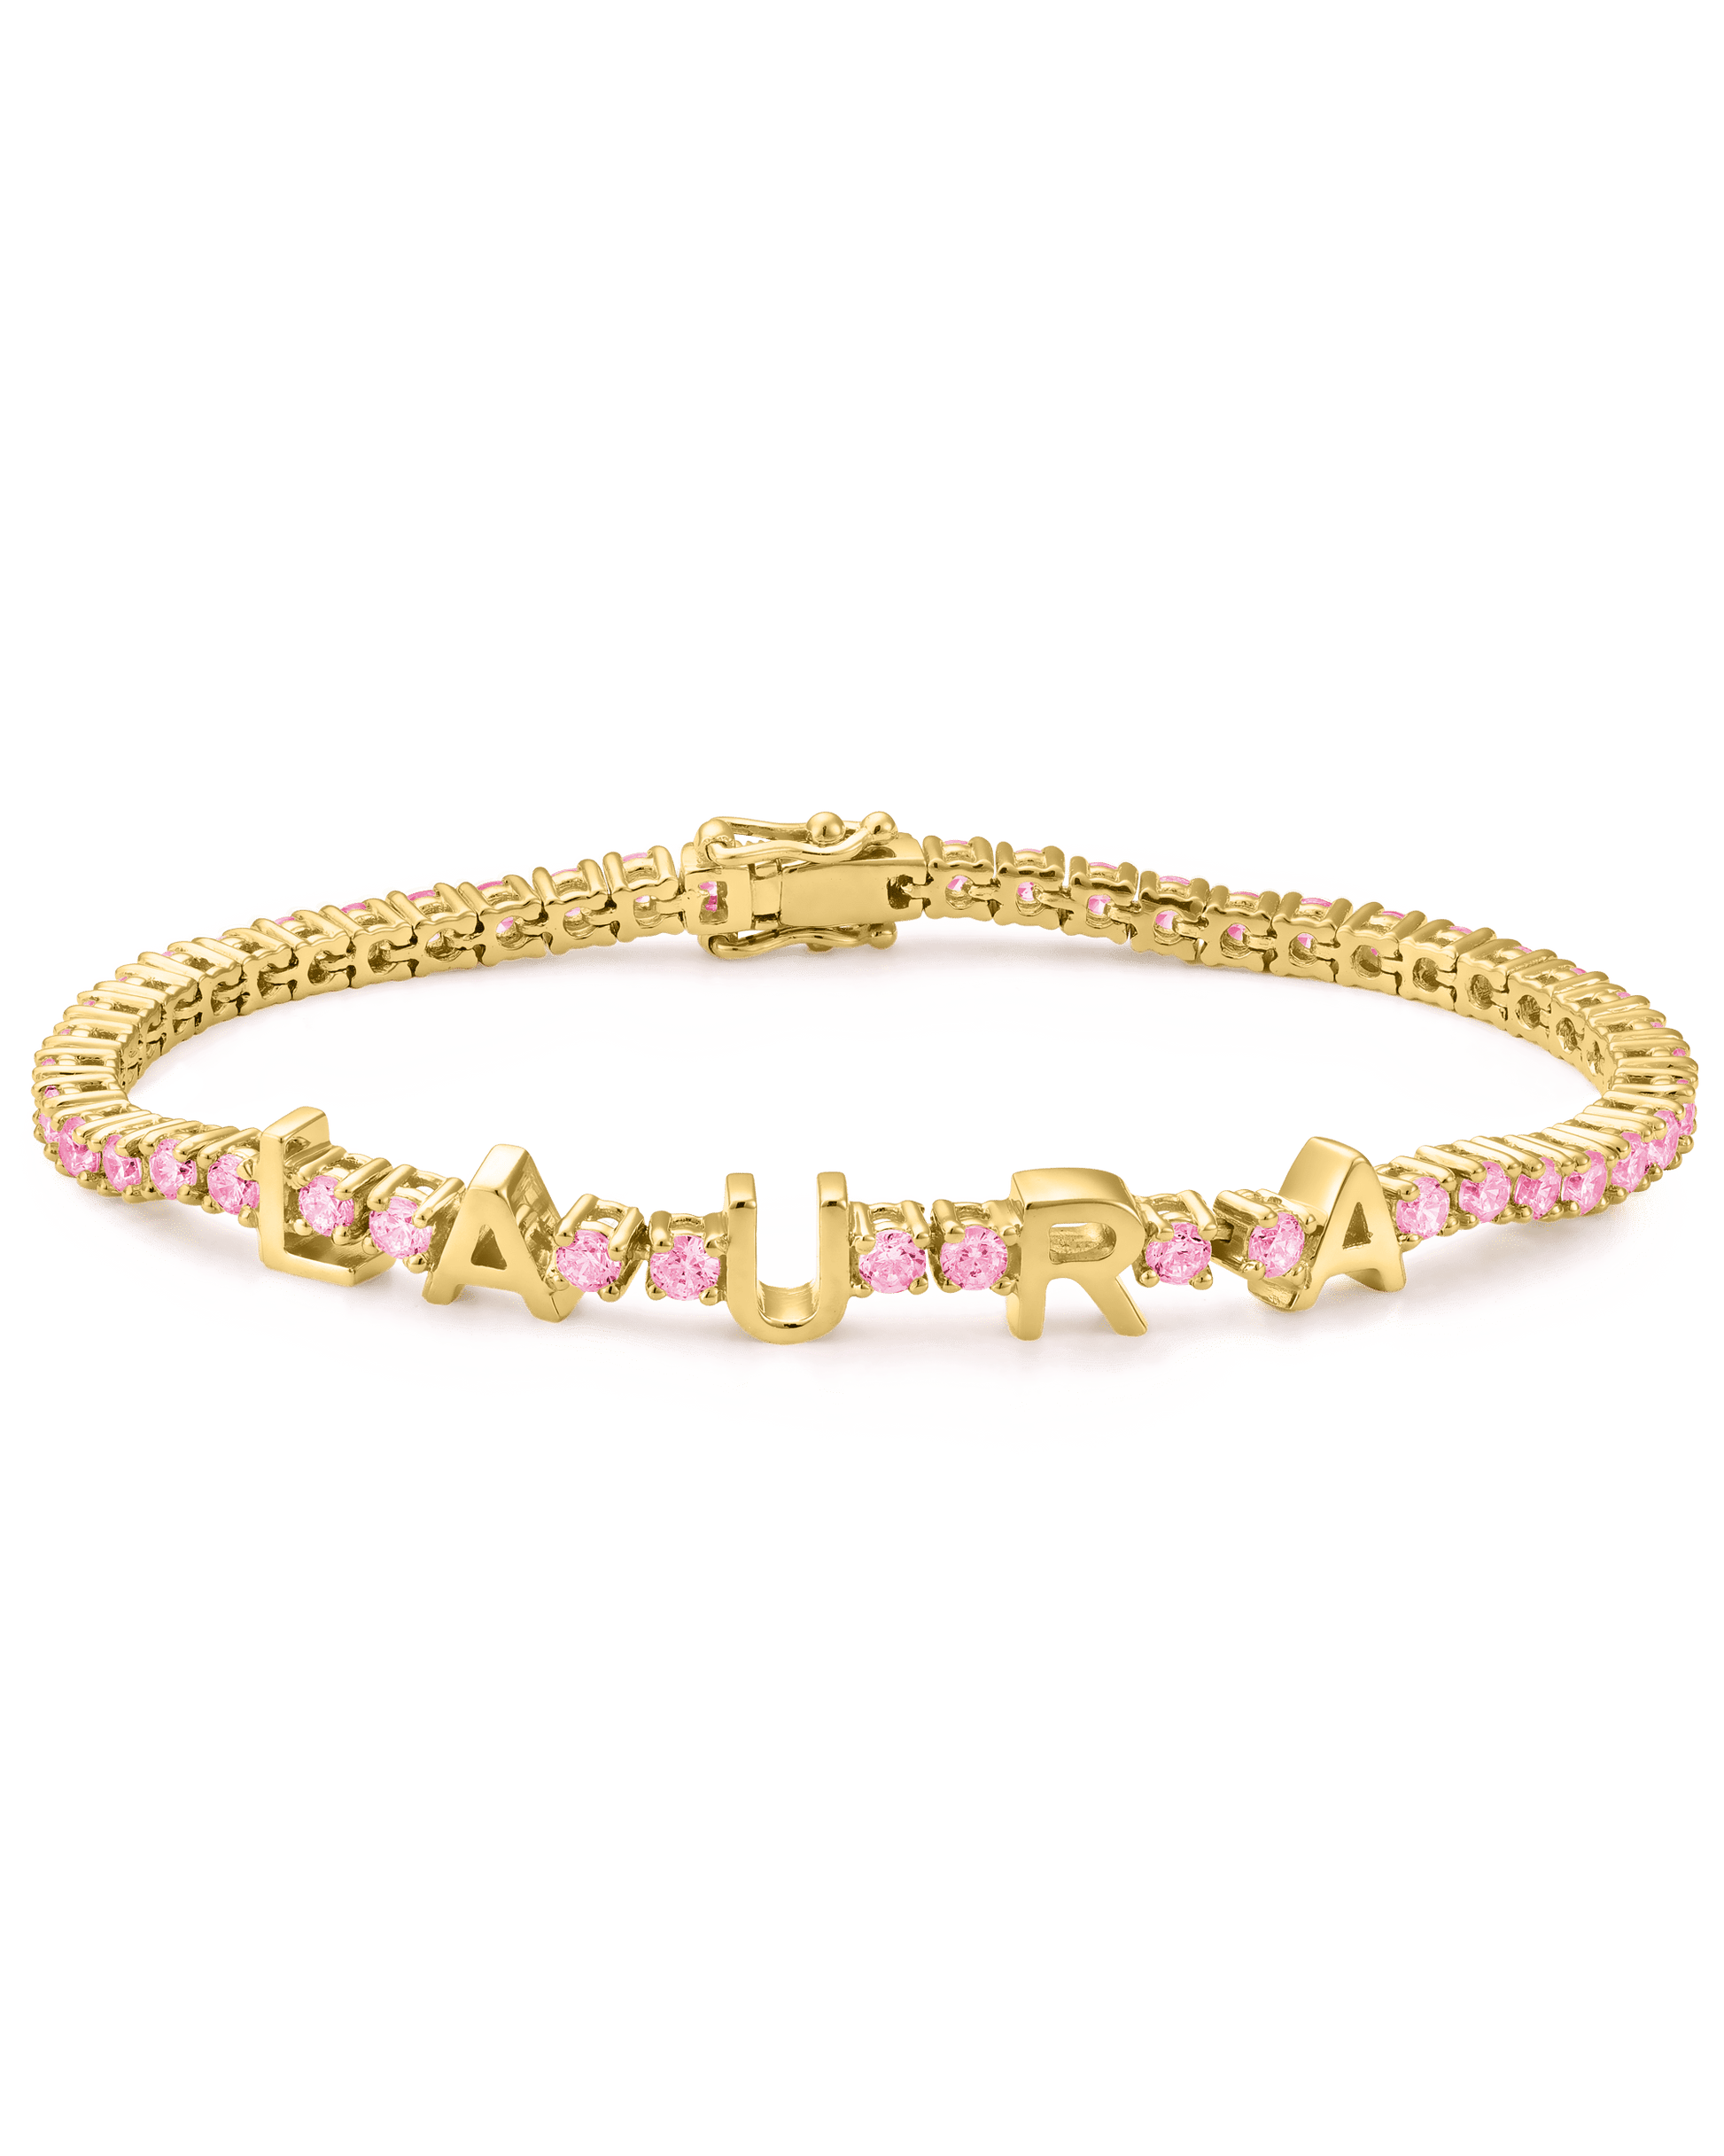 Evert Tennis Bracelet - 18K Gold Vermeil Bracelets magal-dev Light Pink 1 6"